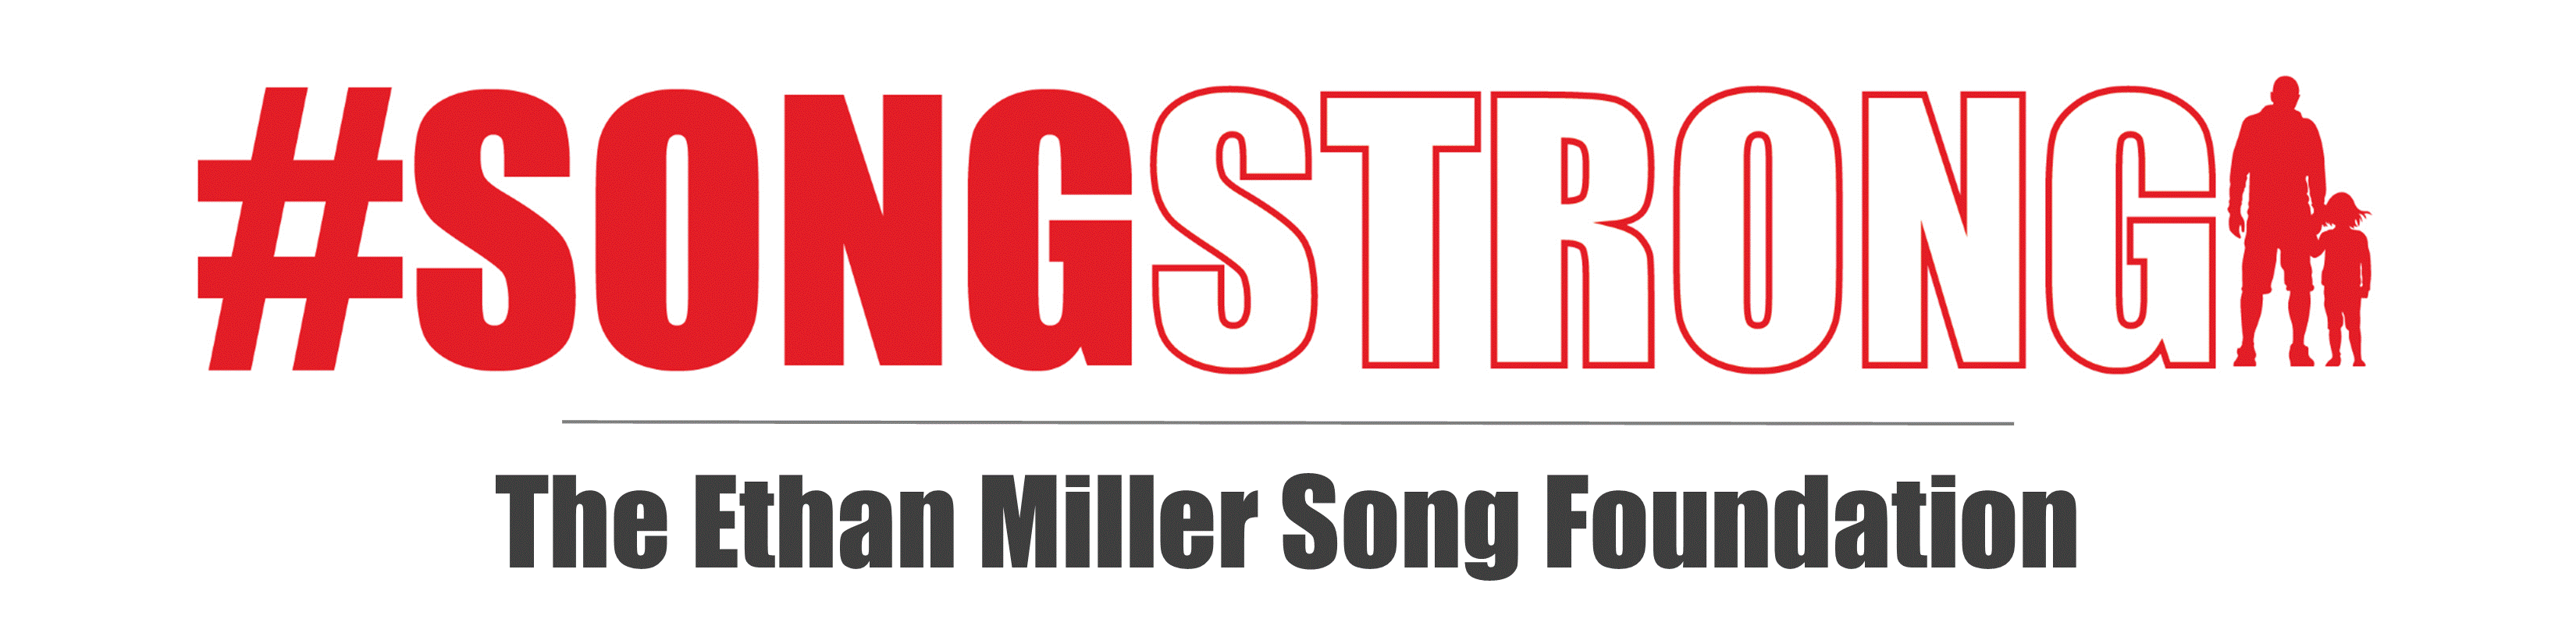 Ethan Miller Song Foundation logo